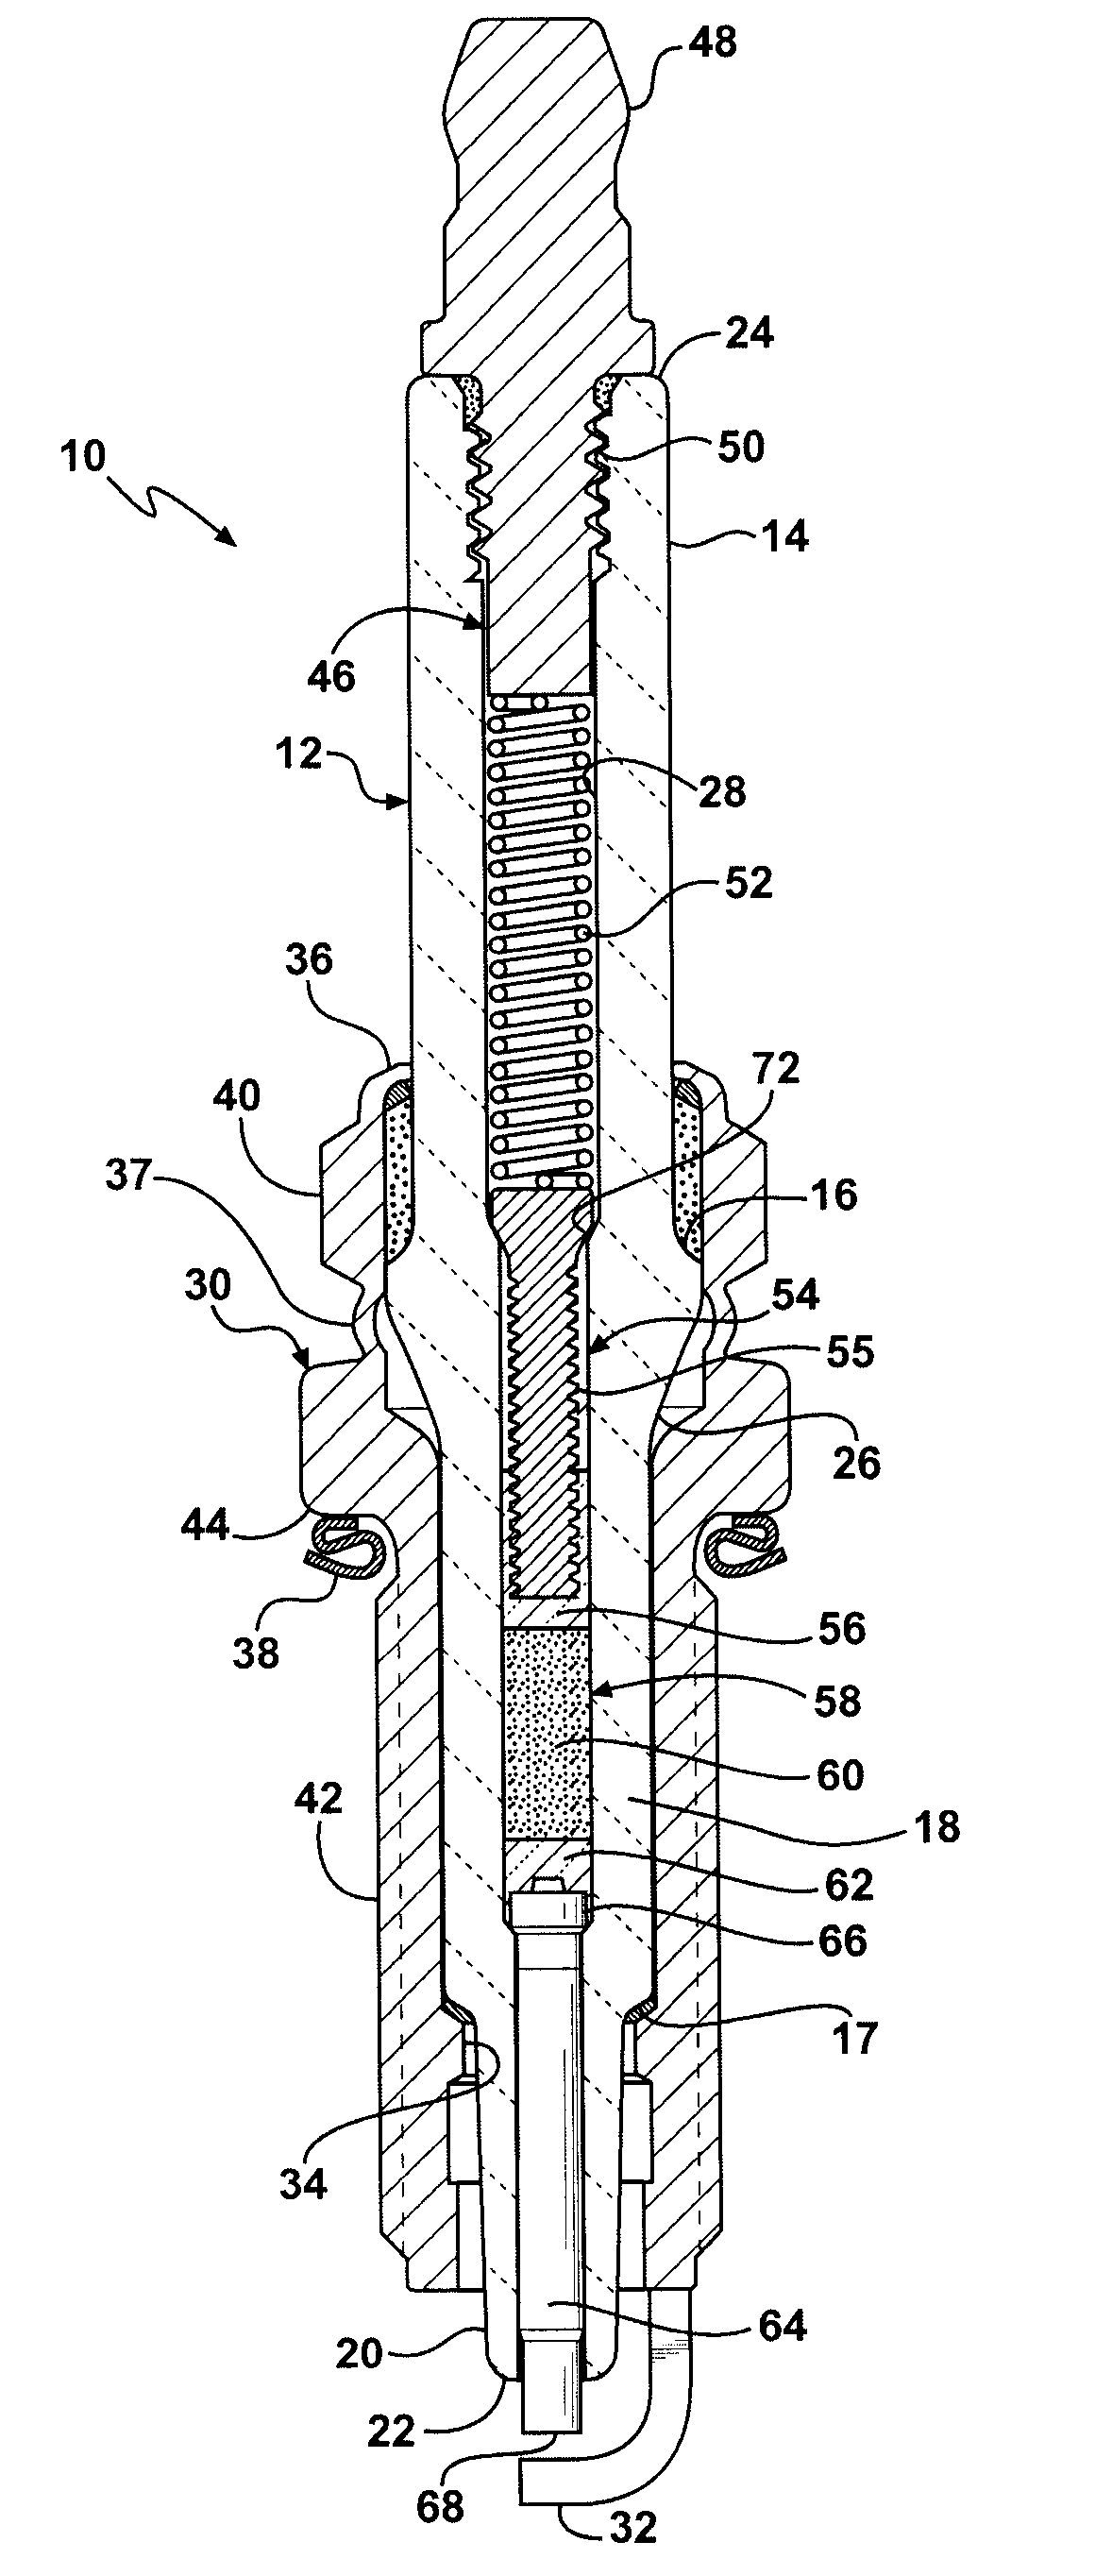 Small-diameter spark plug with resistive seal